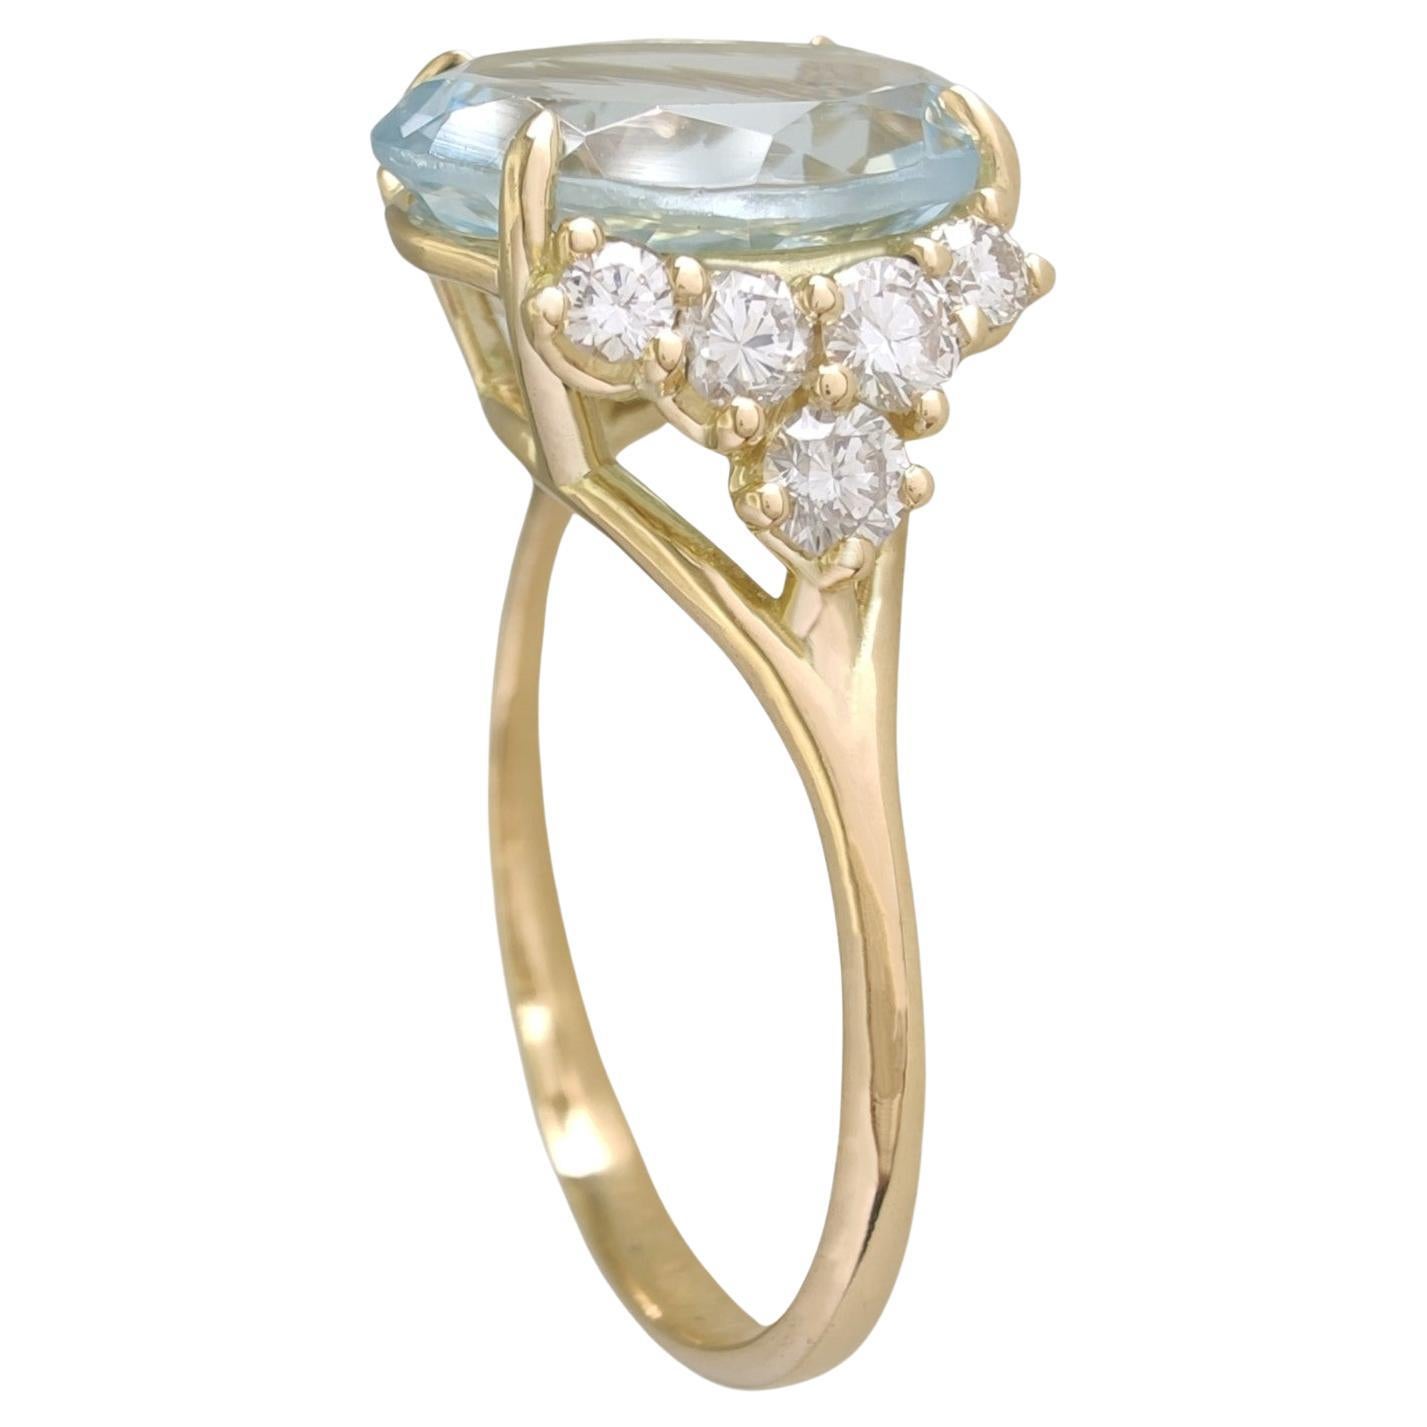 2.69 Carat Aquamarine and 0.25 Carat Diamond Ring in 18k Yellow Gold For Sale